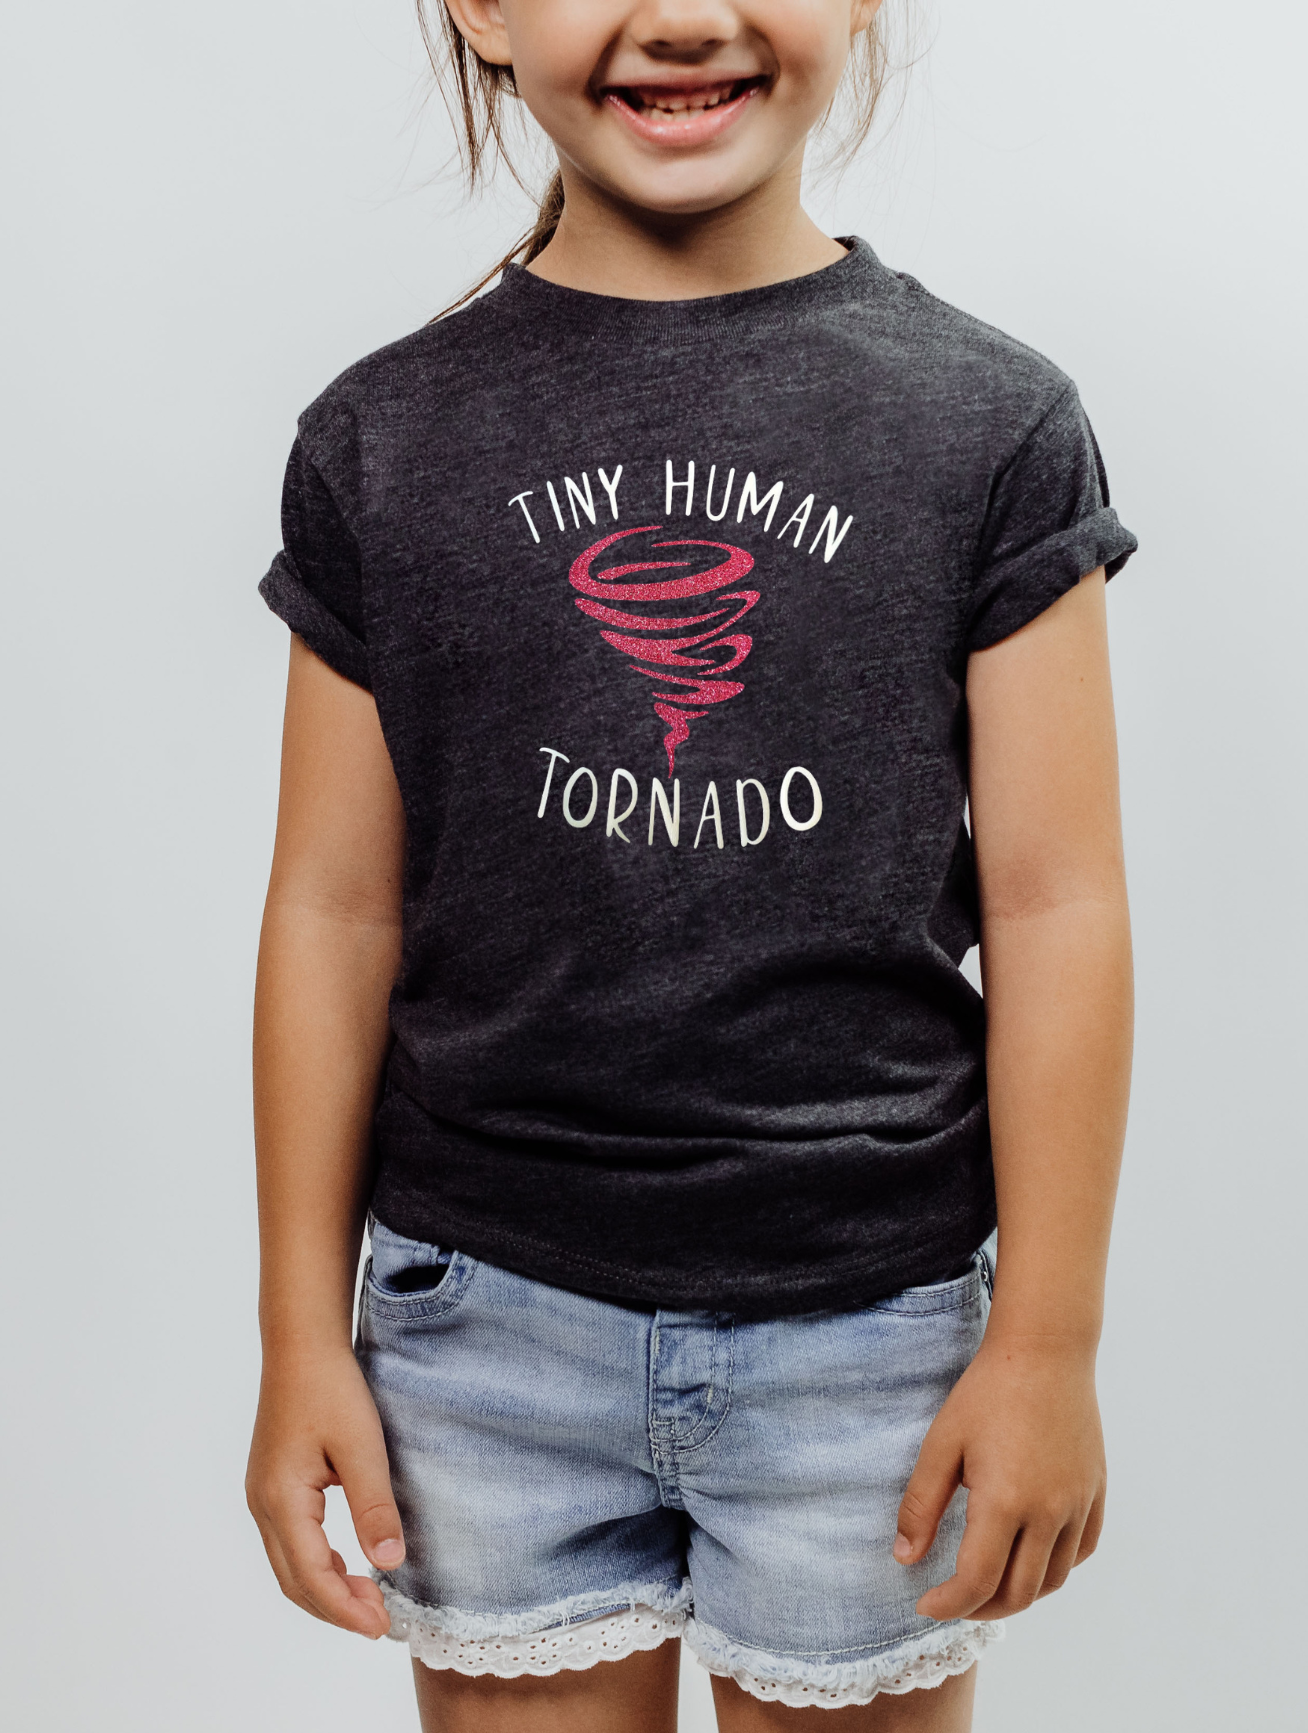 Tiny Human Tornado (Pink Glitter) - Toddler T-shirt